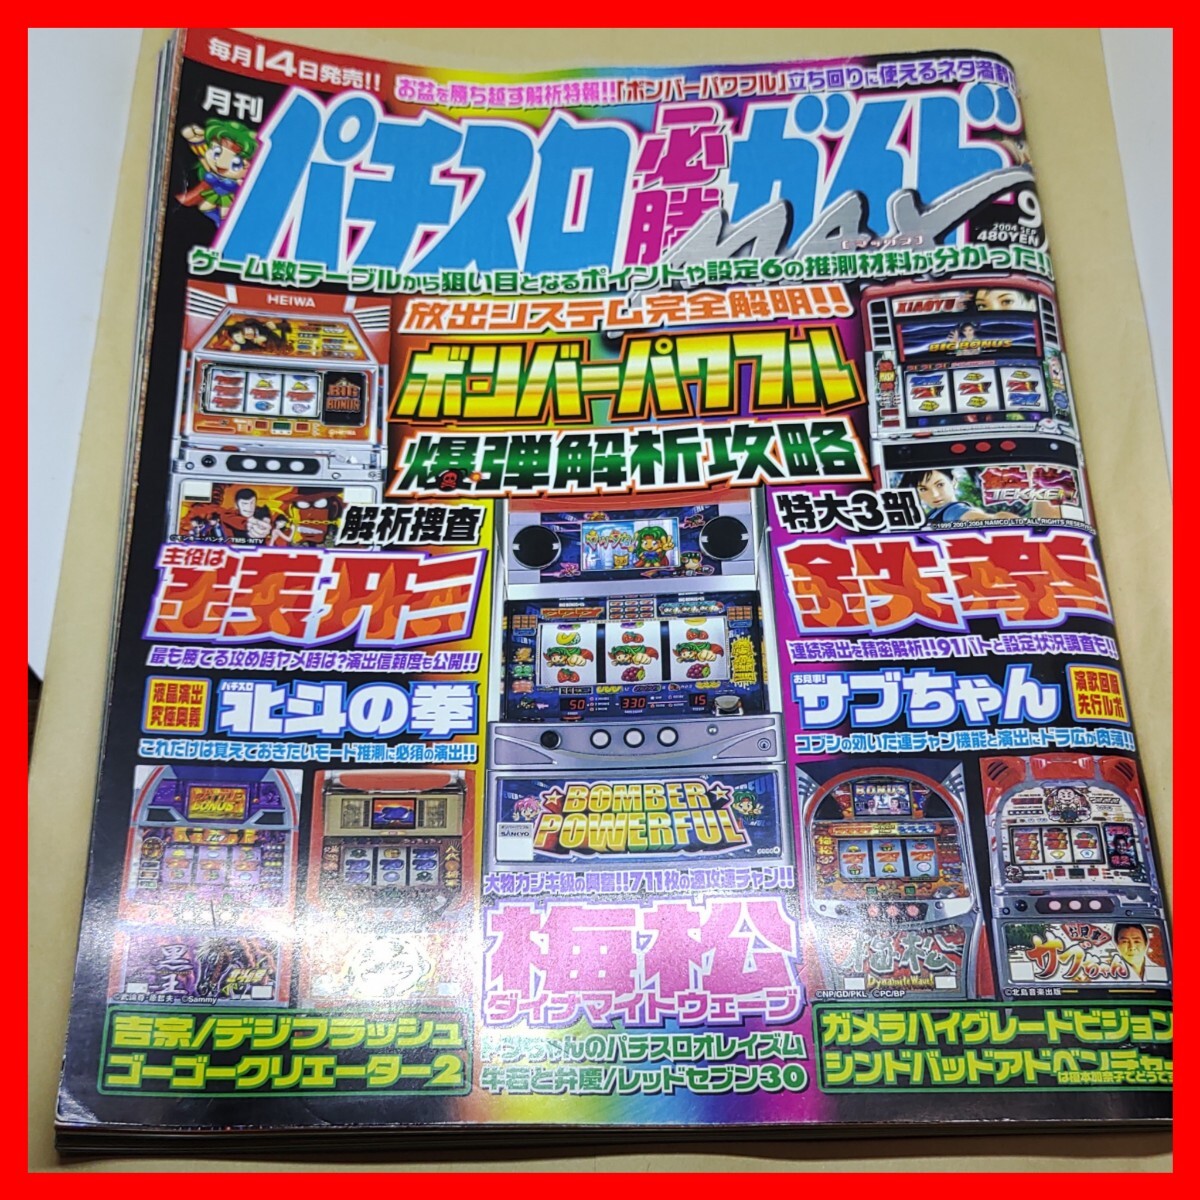  slot machine certainly . guide MAX 2004 year 4 month Byakuya-Shobo Bomber powerful iron .. position is sen shape sub Chan Ken, the Great Bear Fist Gamera pine plum ..teji flash 